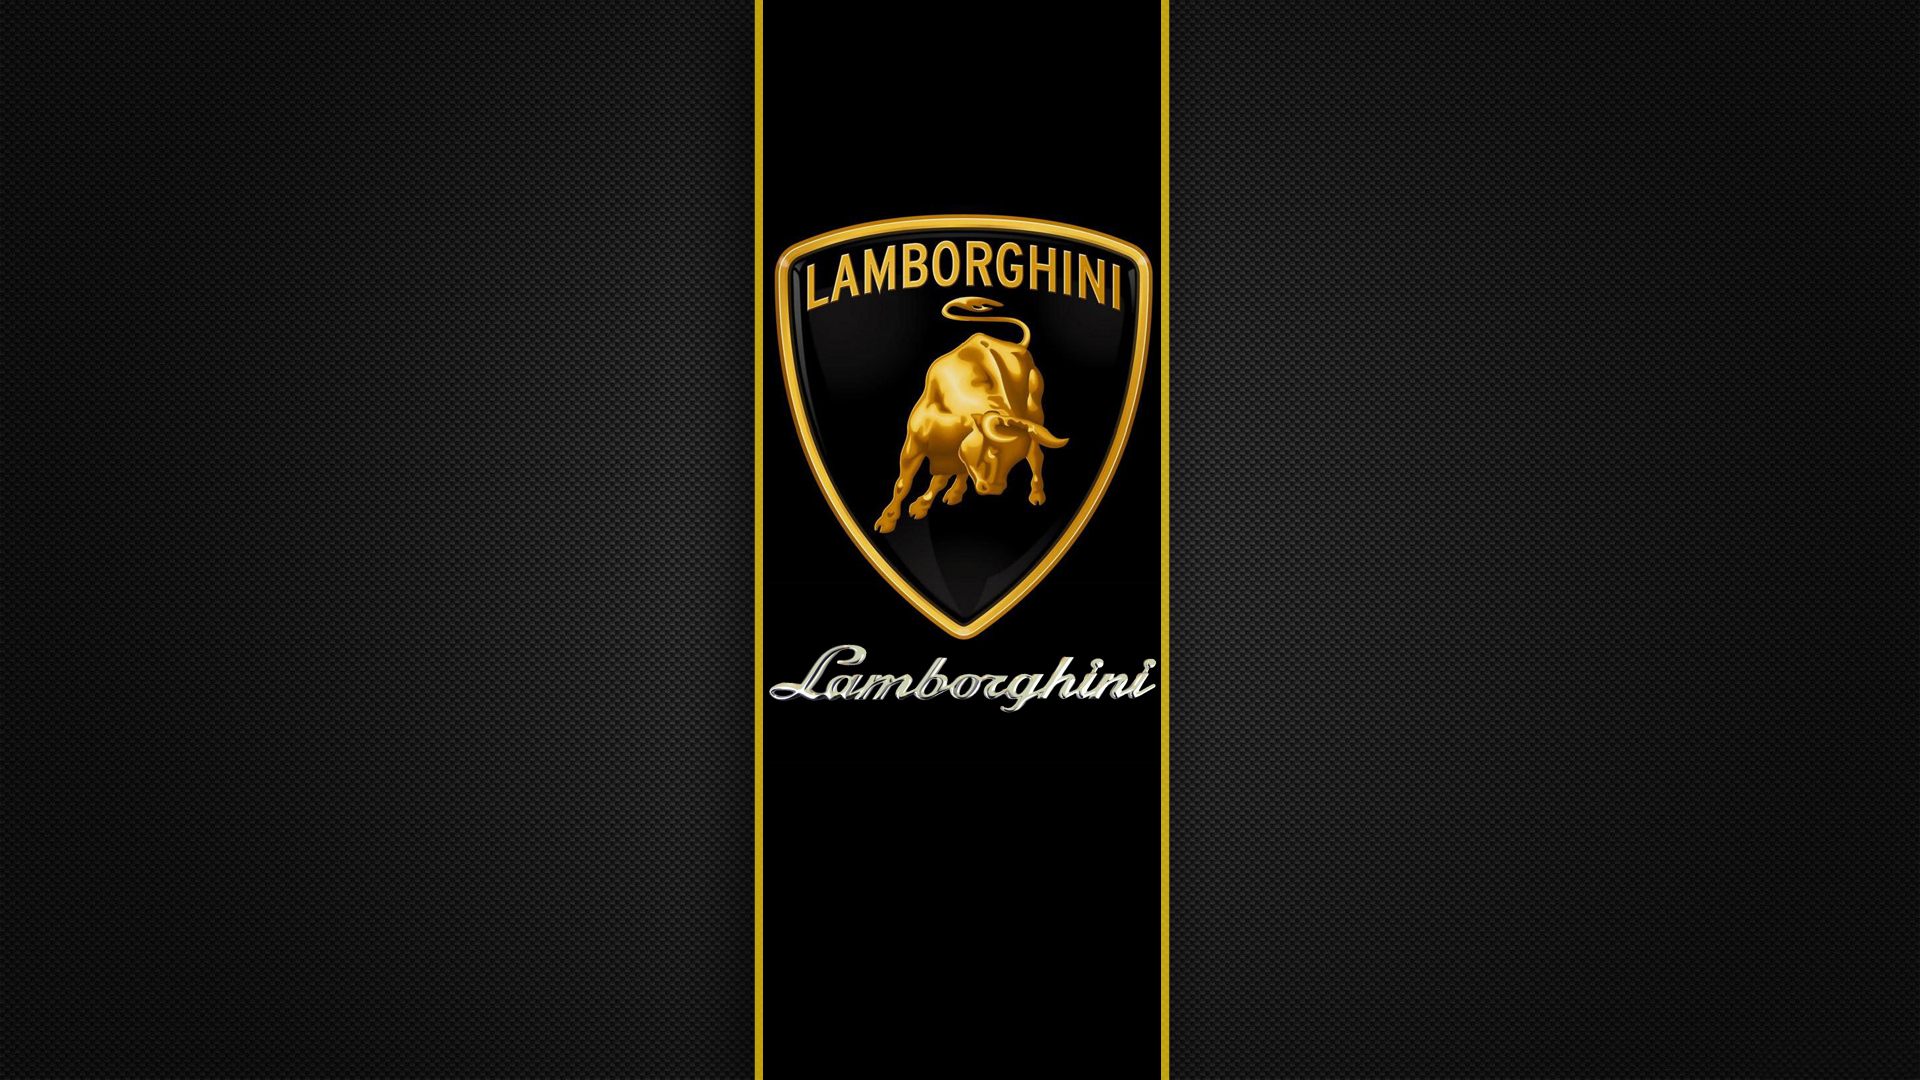 Lamborghini Logo Car Symbol Image And History